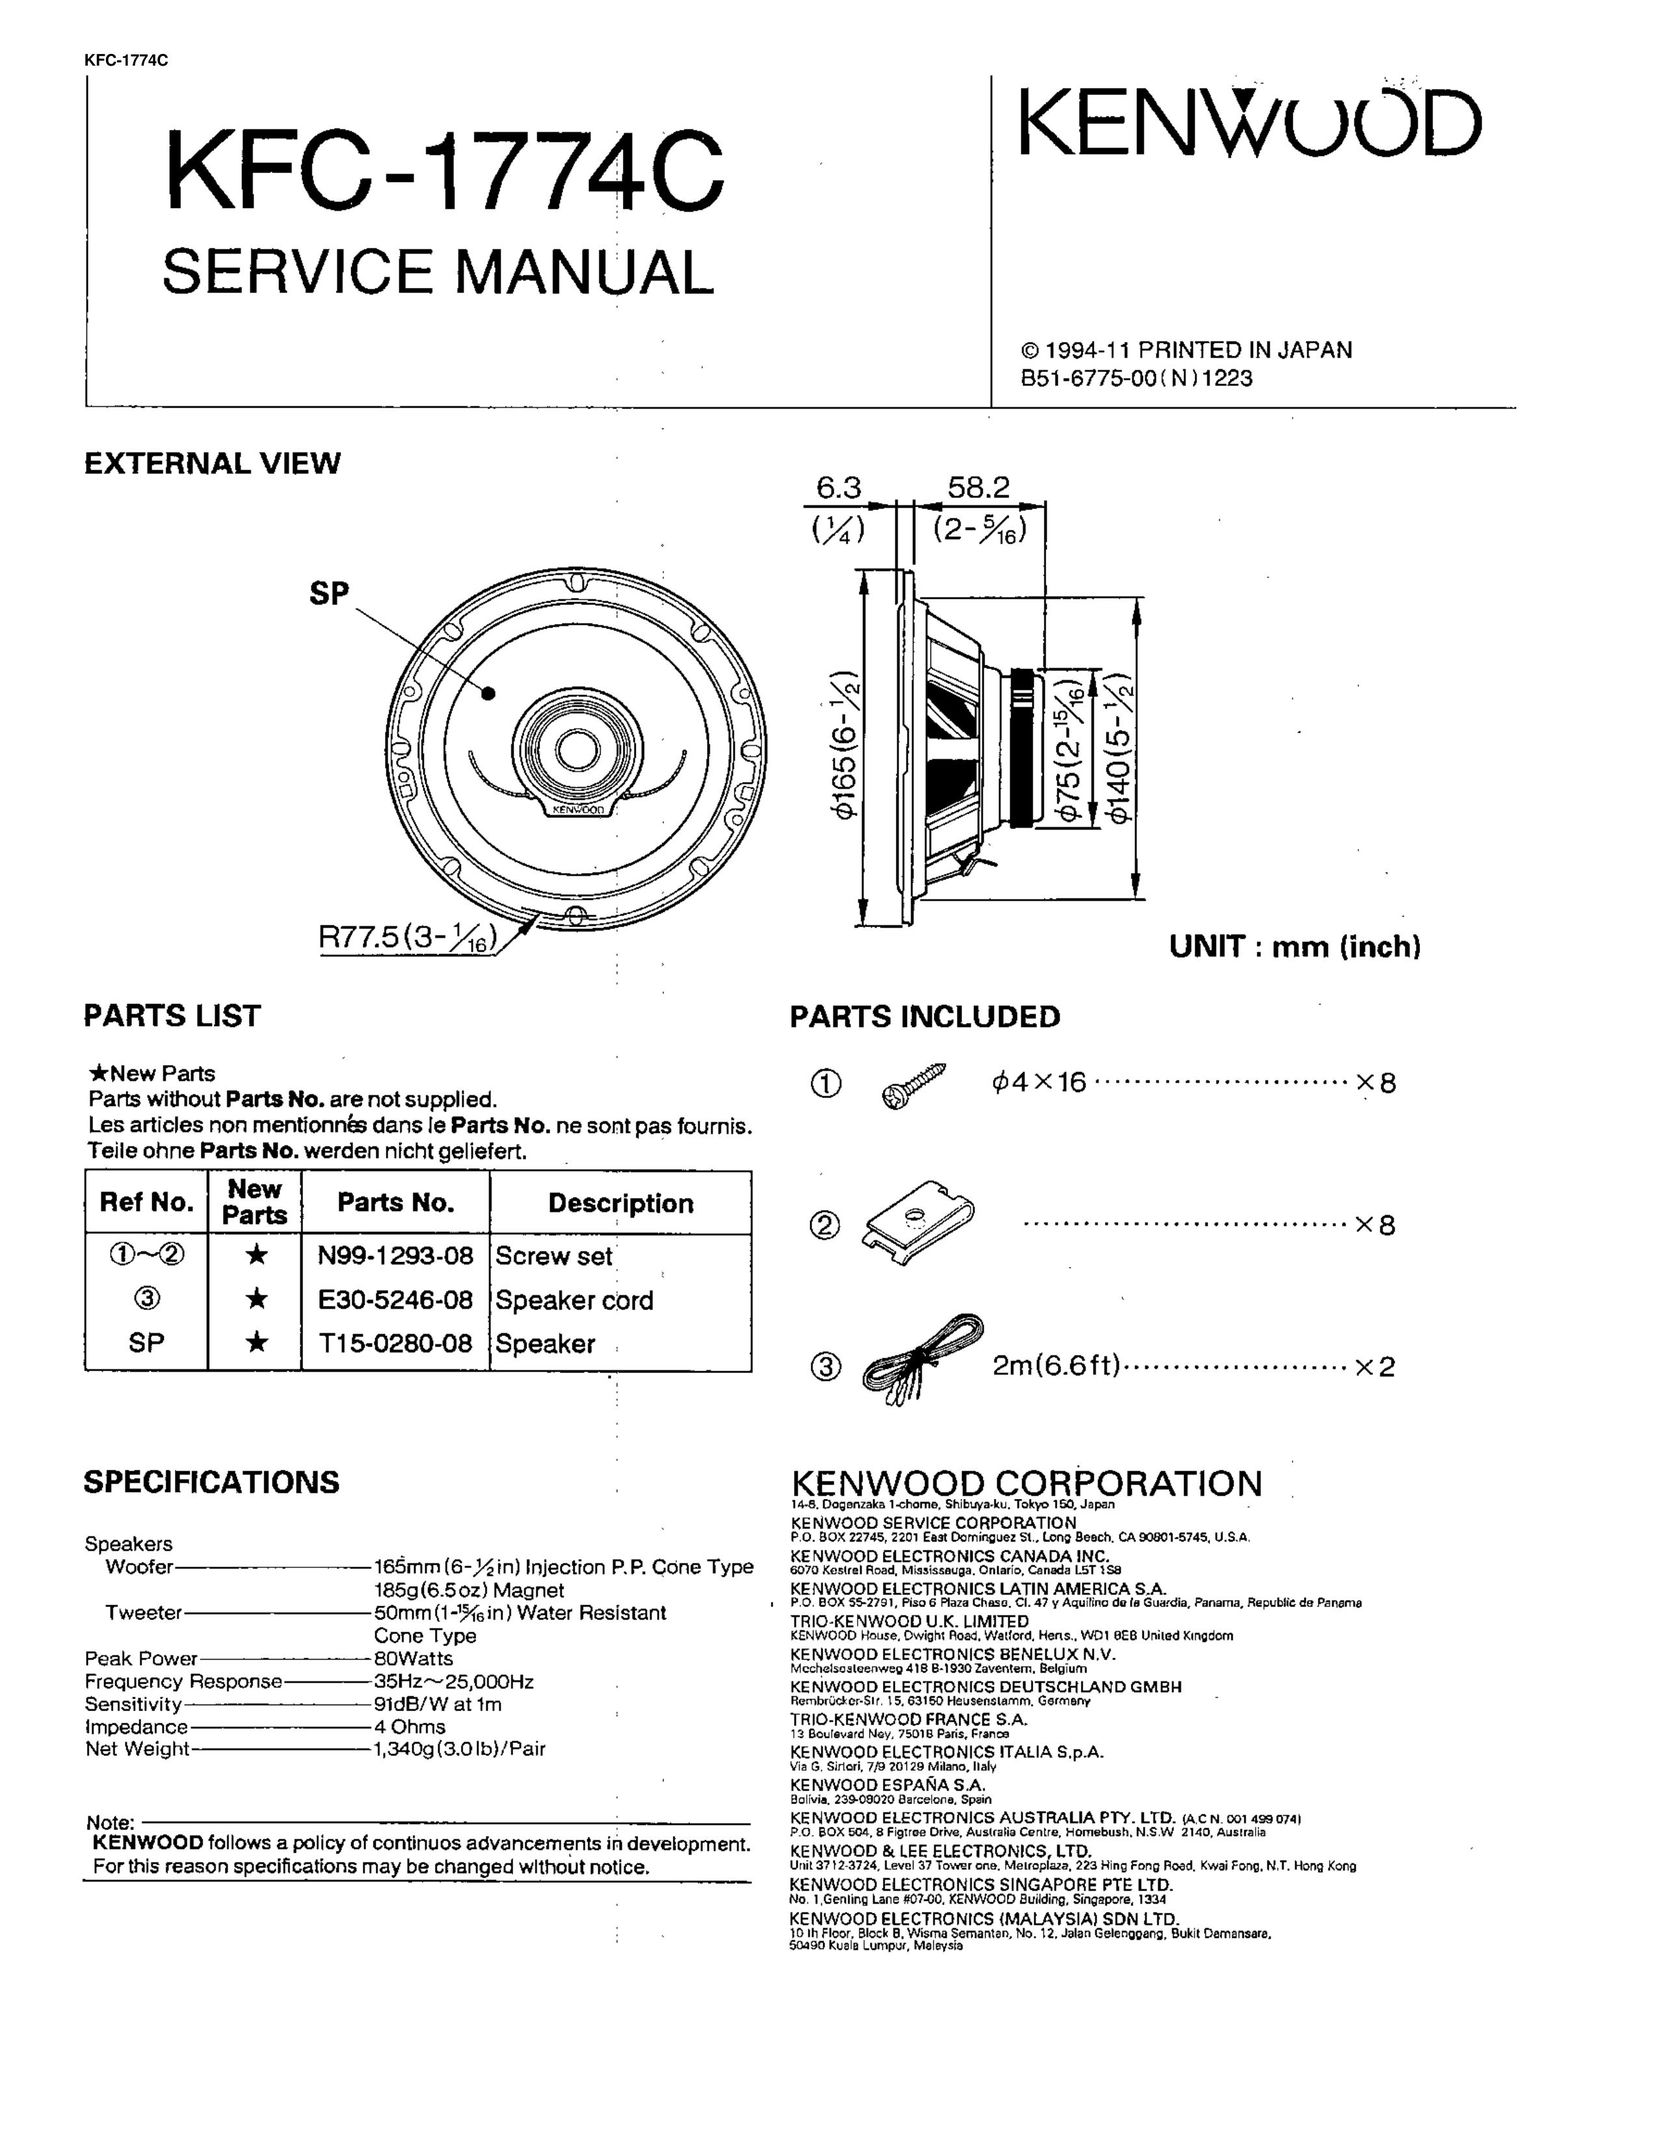 Kenwood KFC-1774C Speaker User Manual